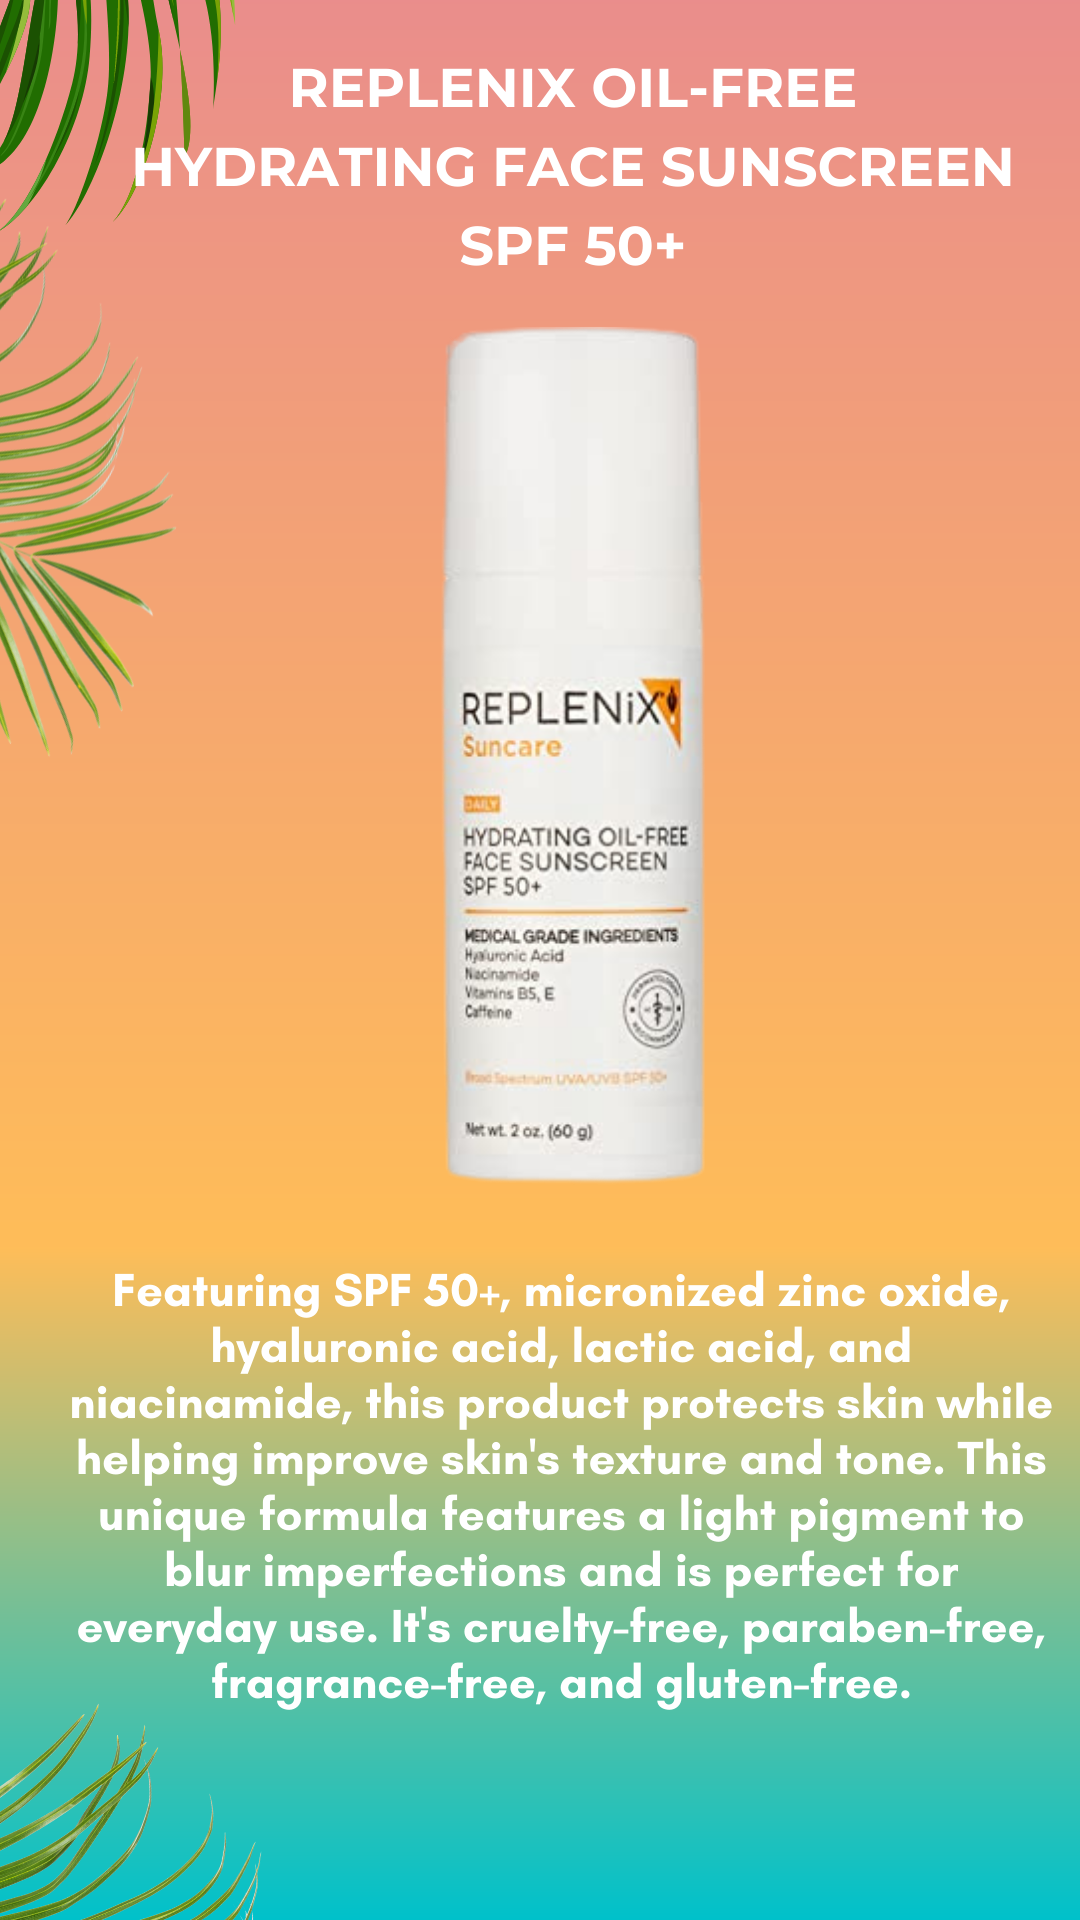 Replenix Oil-Free Hydrating Face Sunscreen SPF 50+